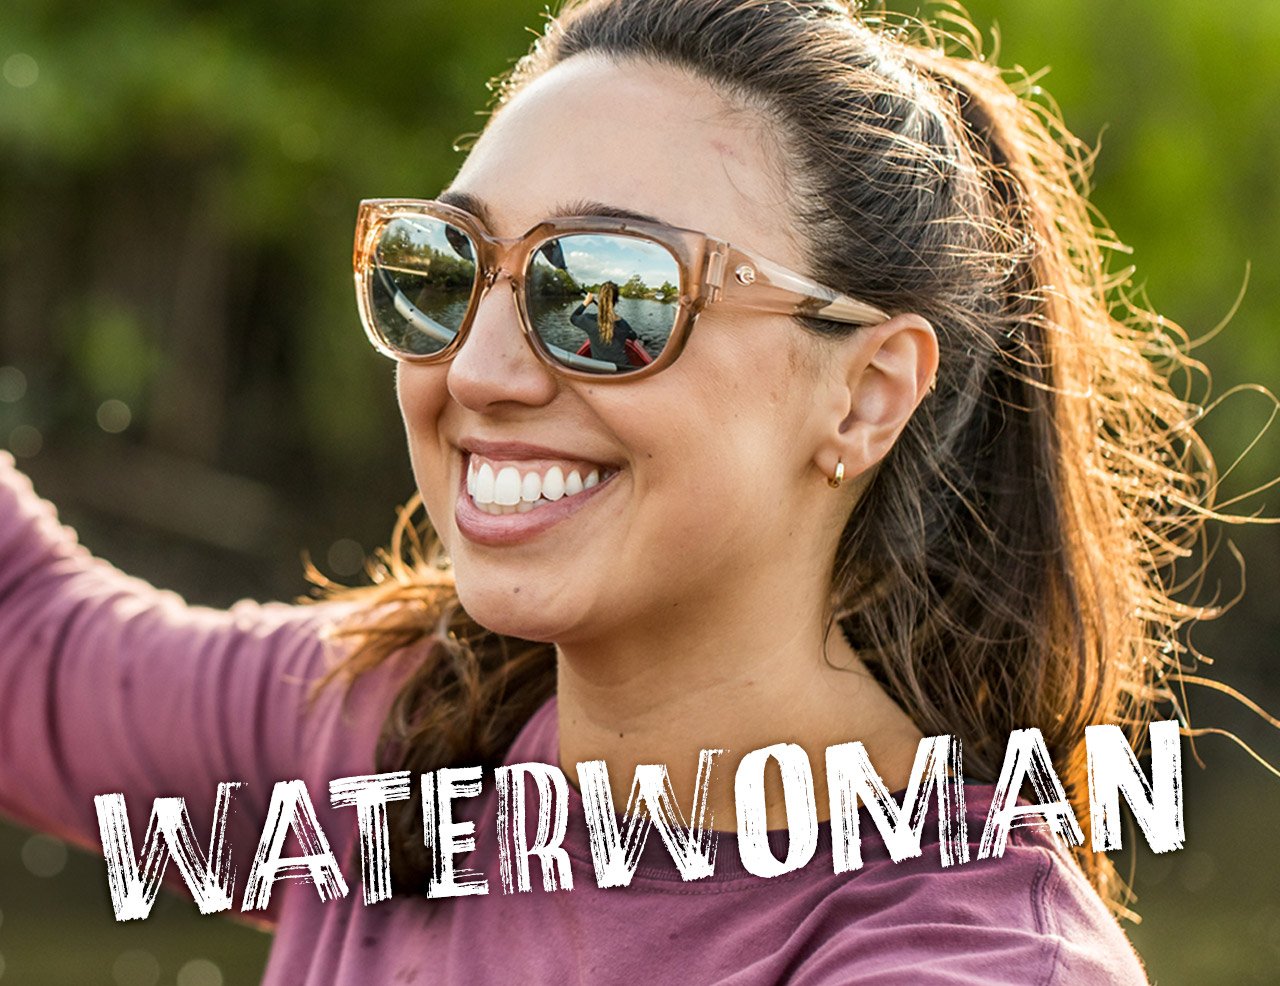 waterwoman costa